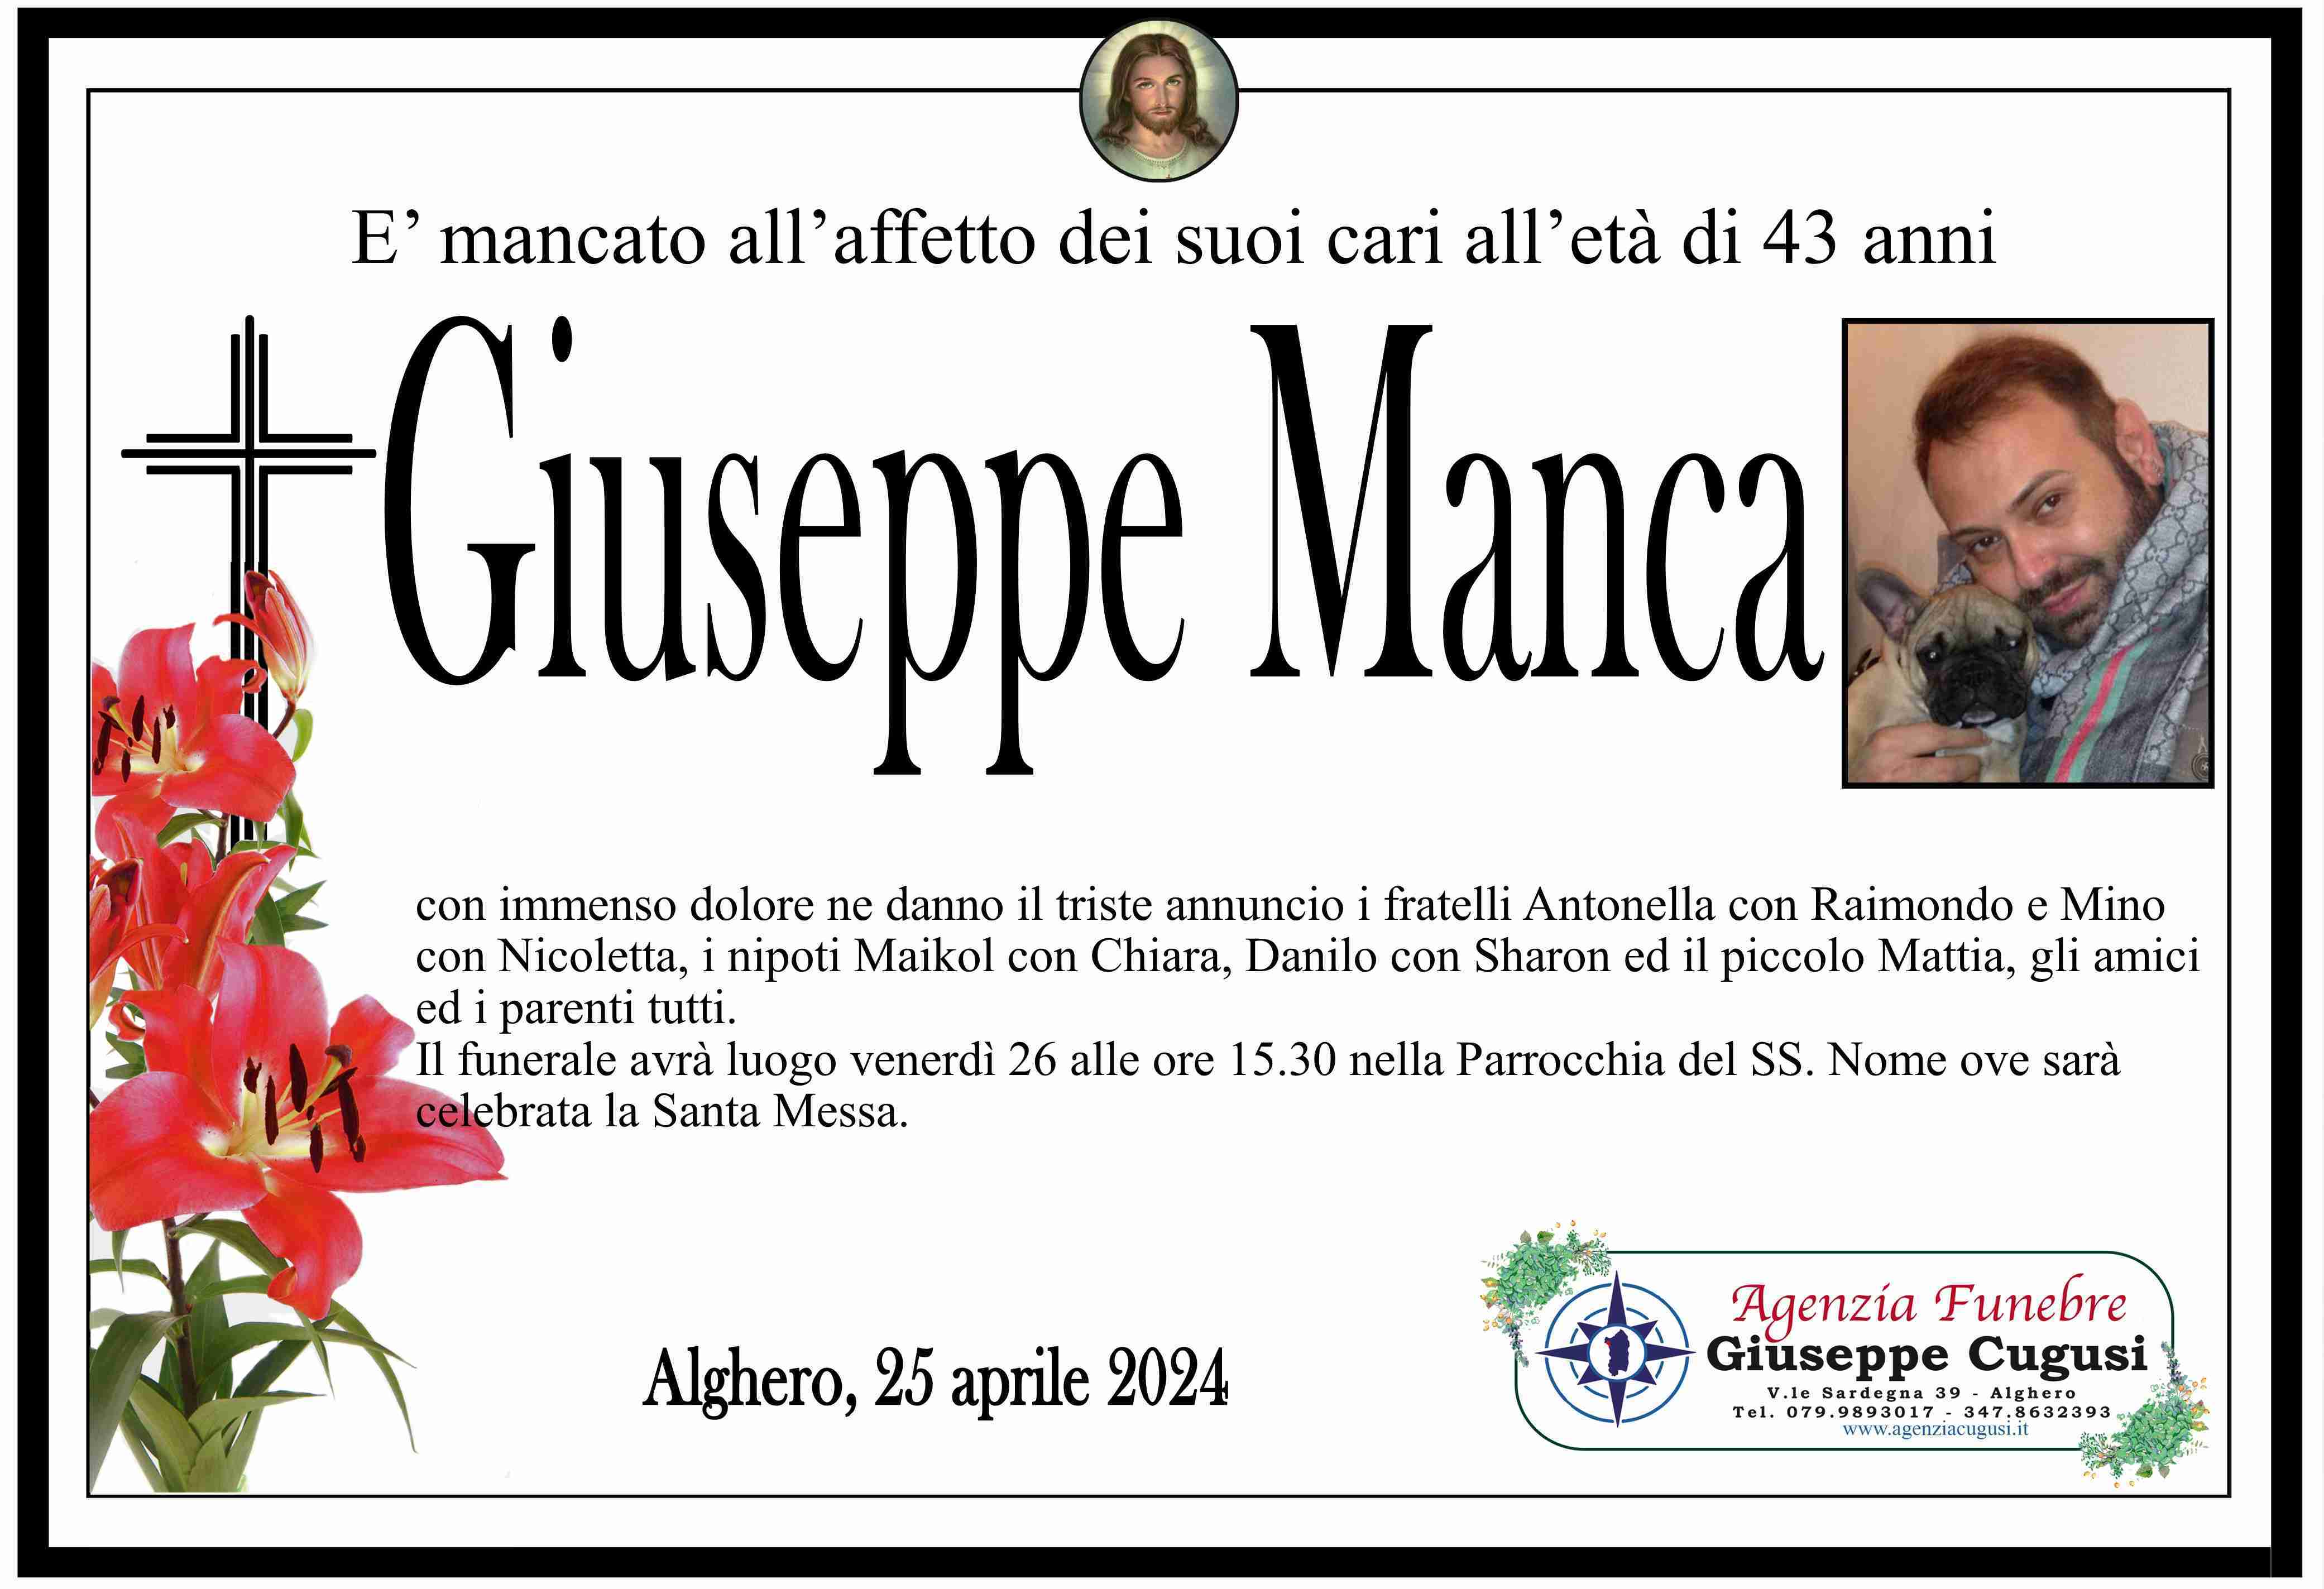 Giuseppe Manca